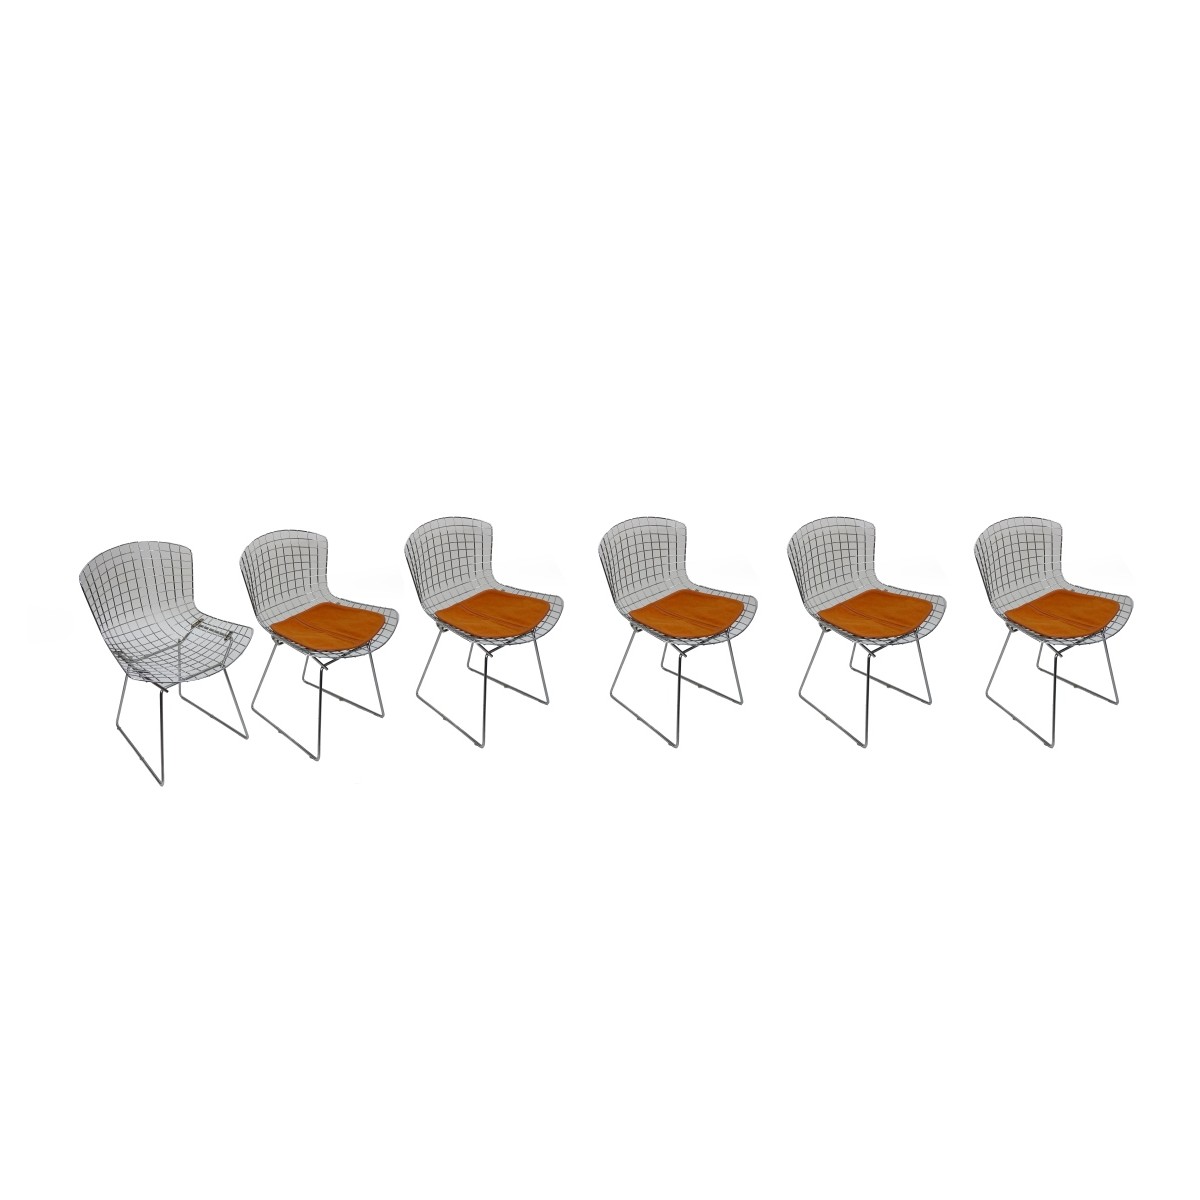 Bertoia Design Knoll Chairs